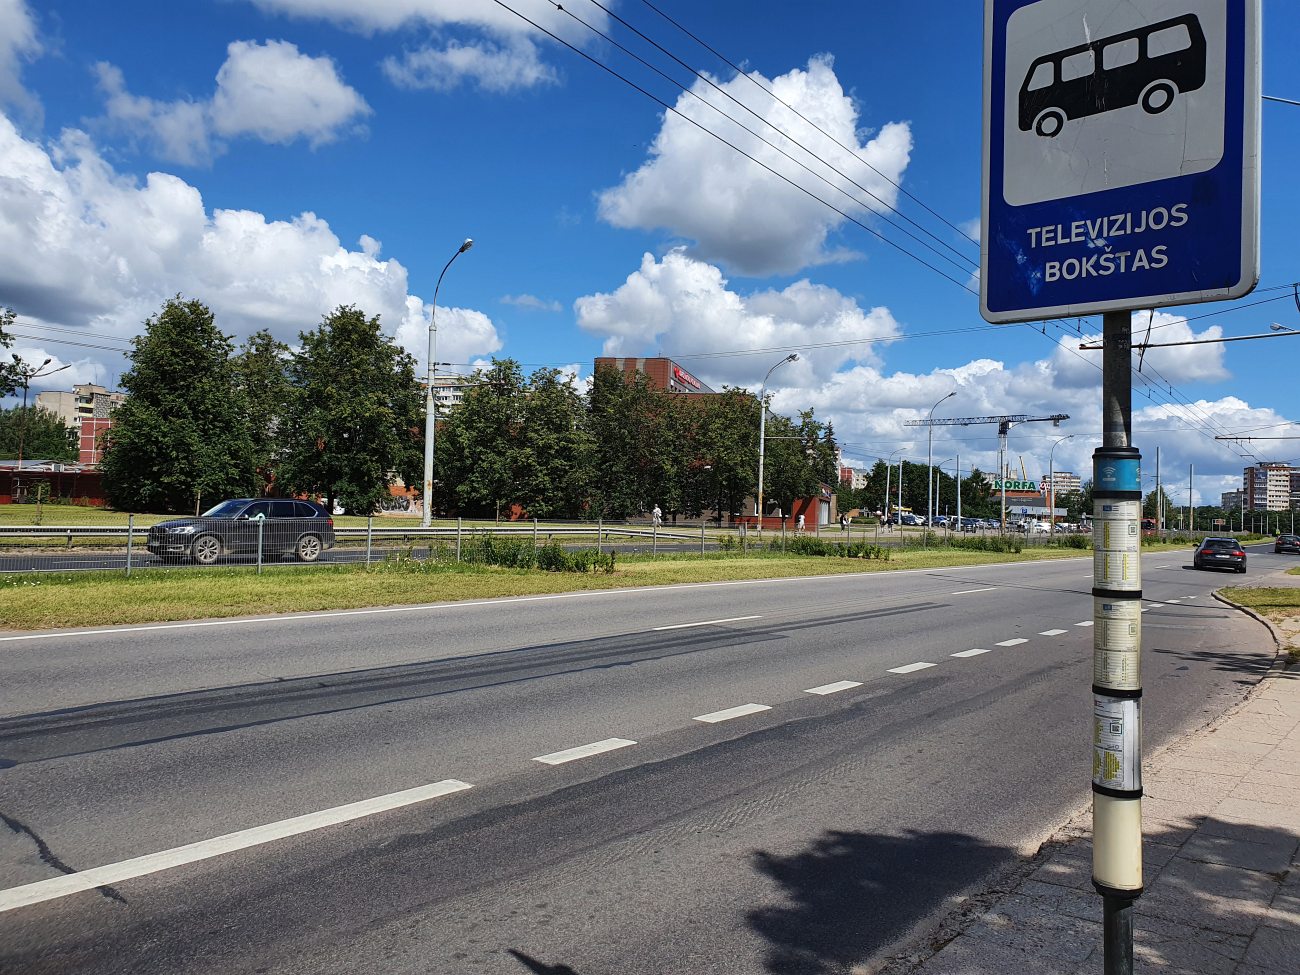 vilnius-tv-tower-bus-stop